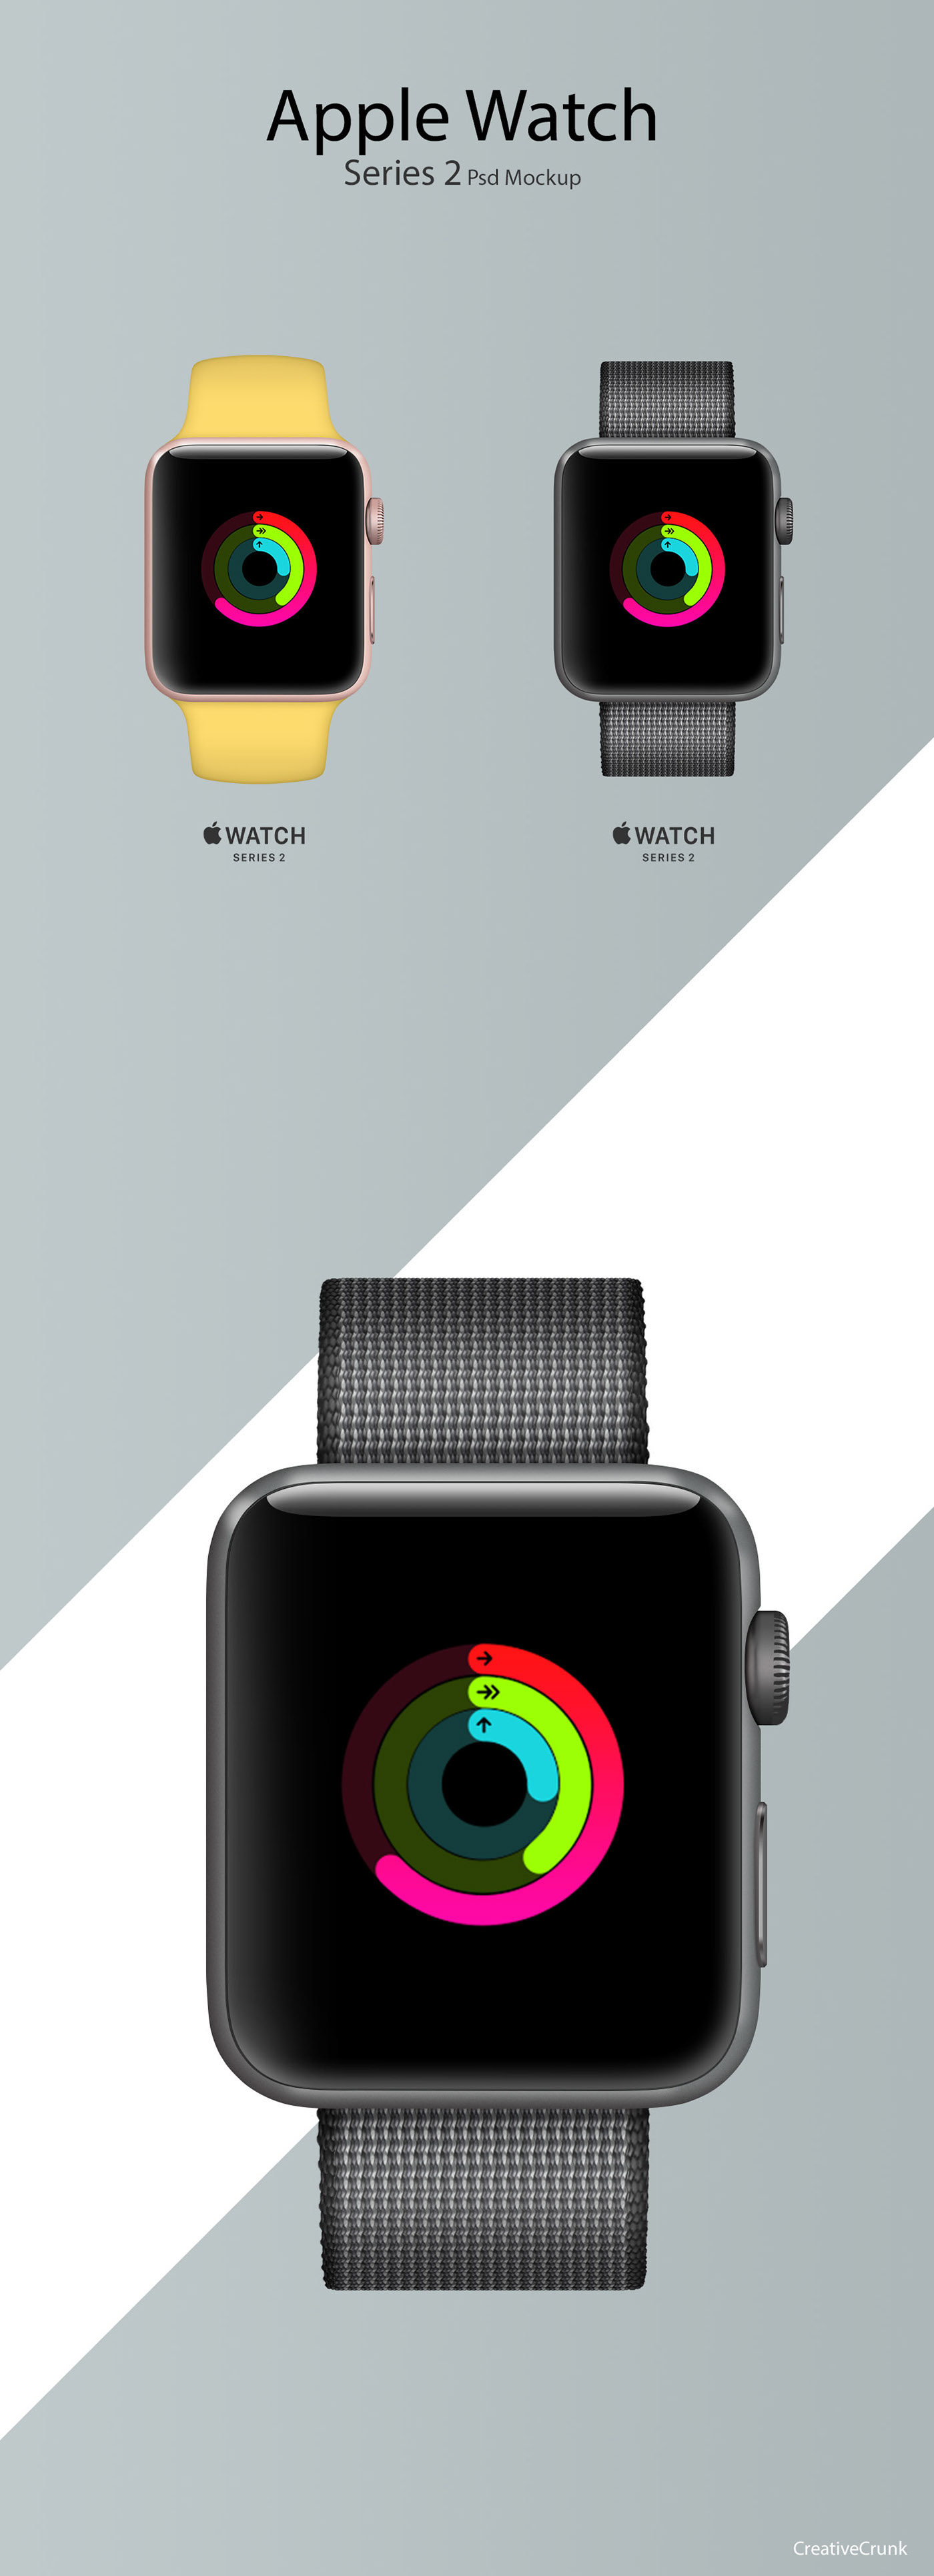 apple watch Watch Series 2 psd psd mockup free psd watch psd Apple PSD free download